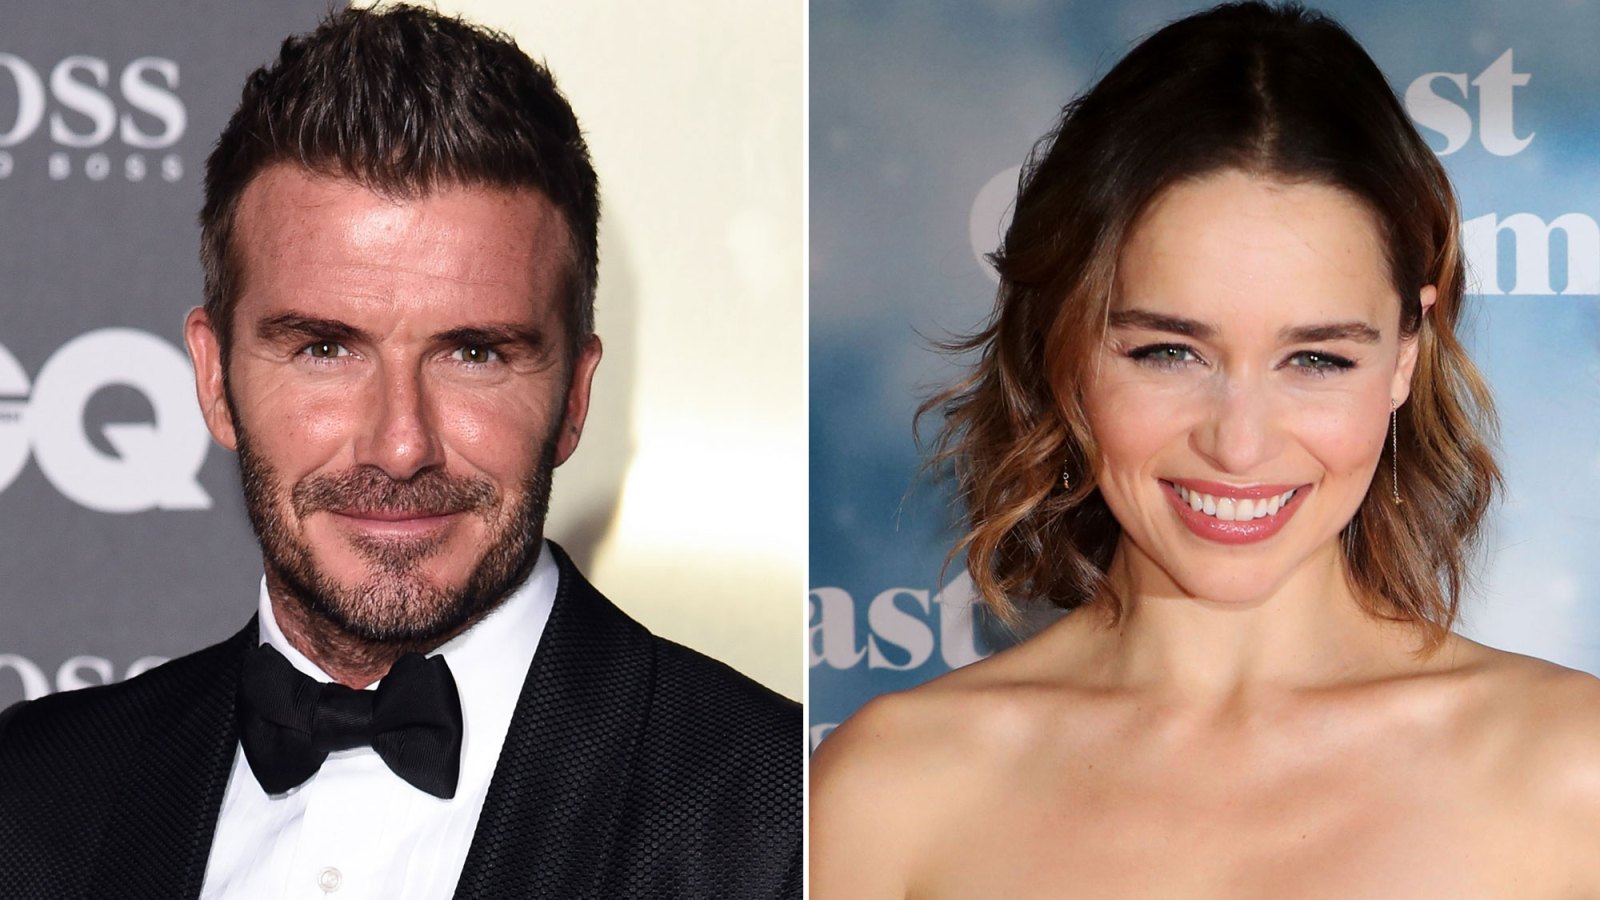 David Beckham ‘Star Struck’ After Meeting ‘Mother of Dragons’ Emilia Clarke